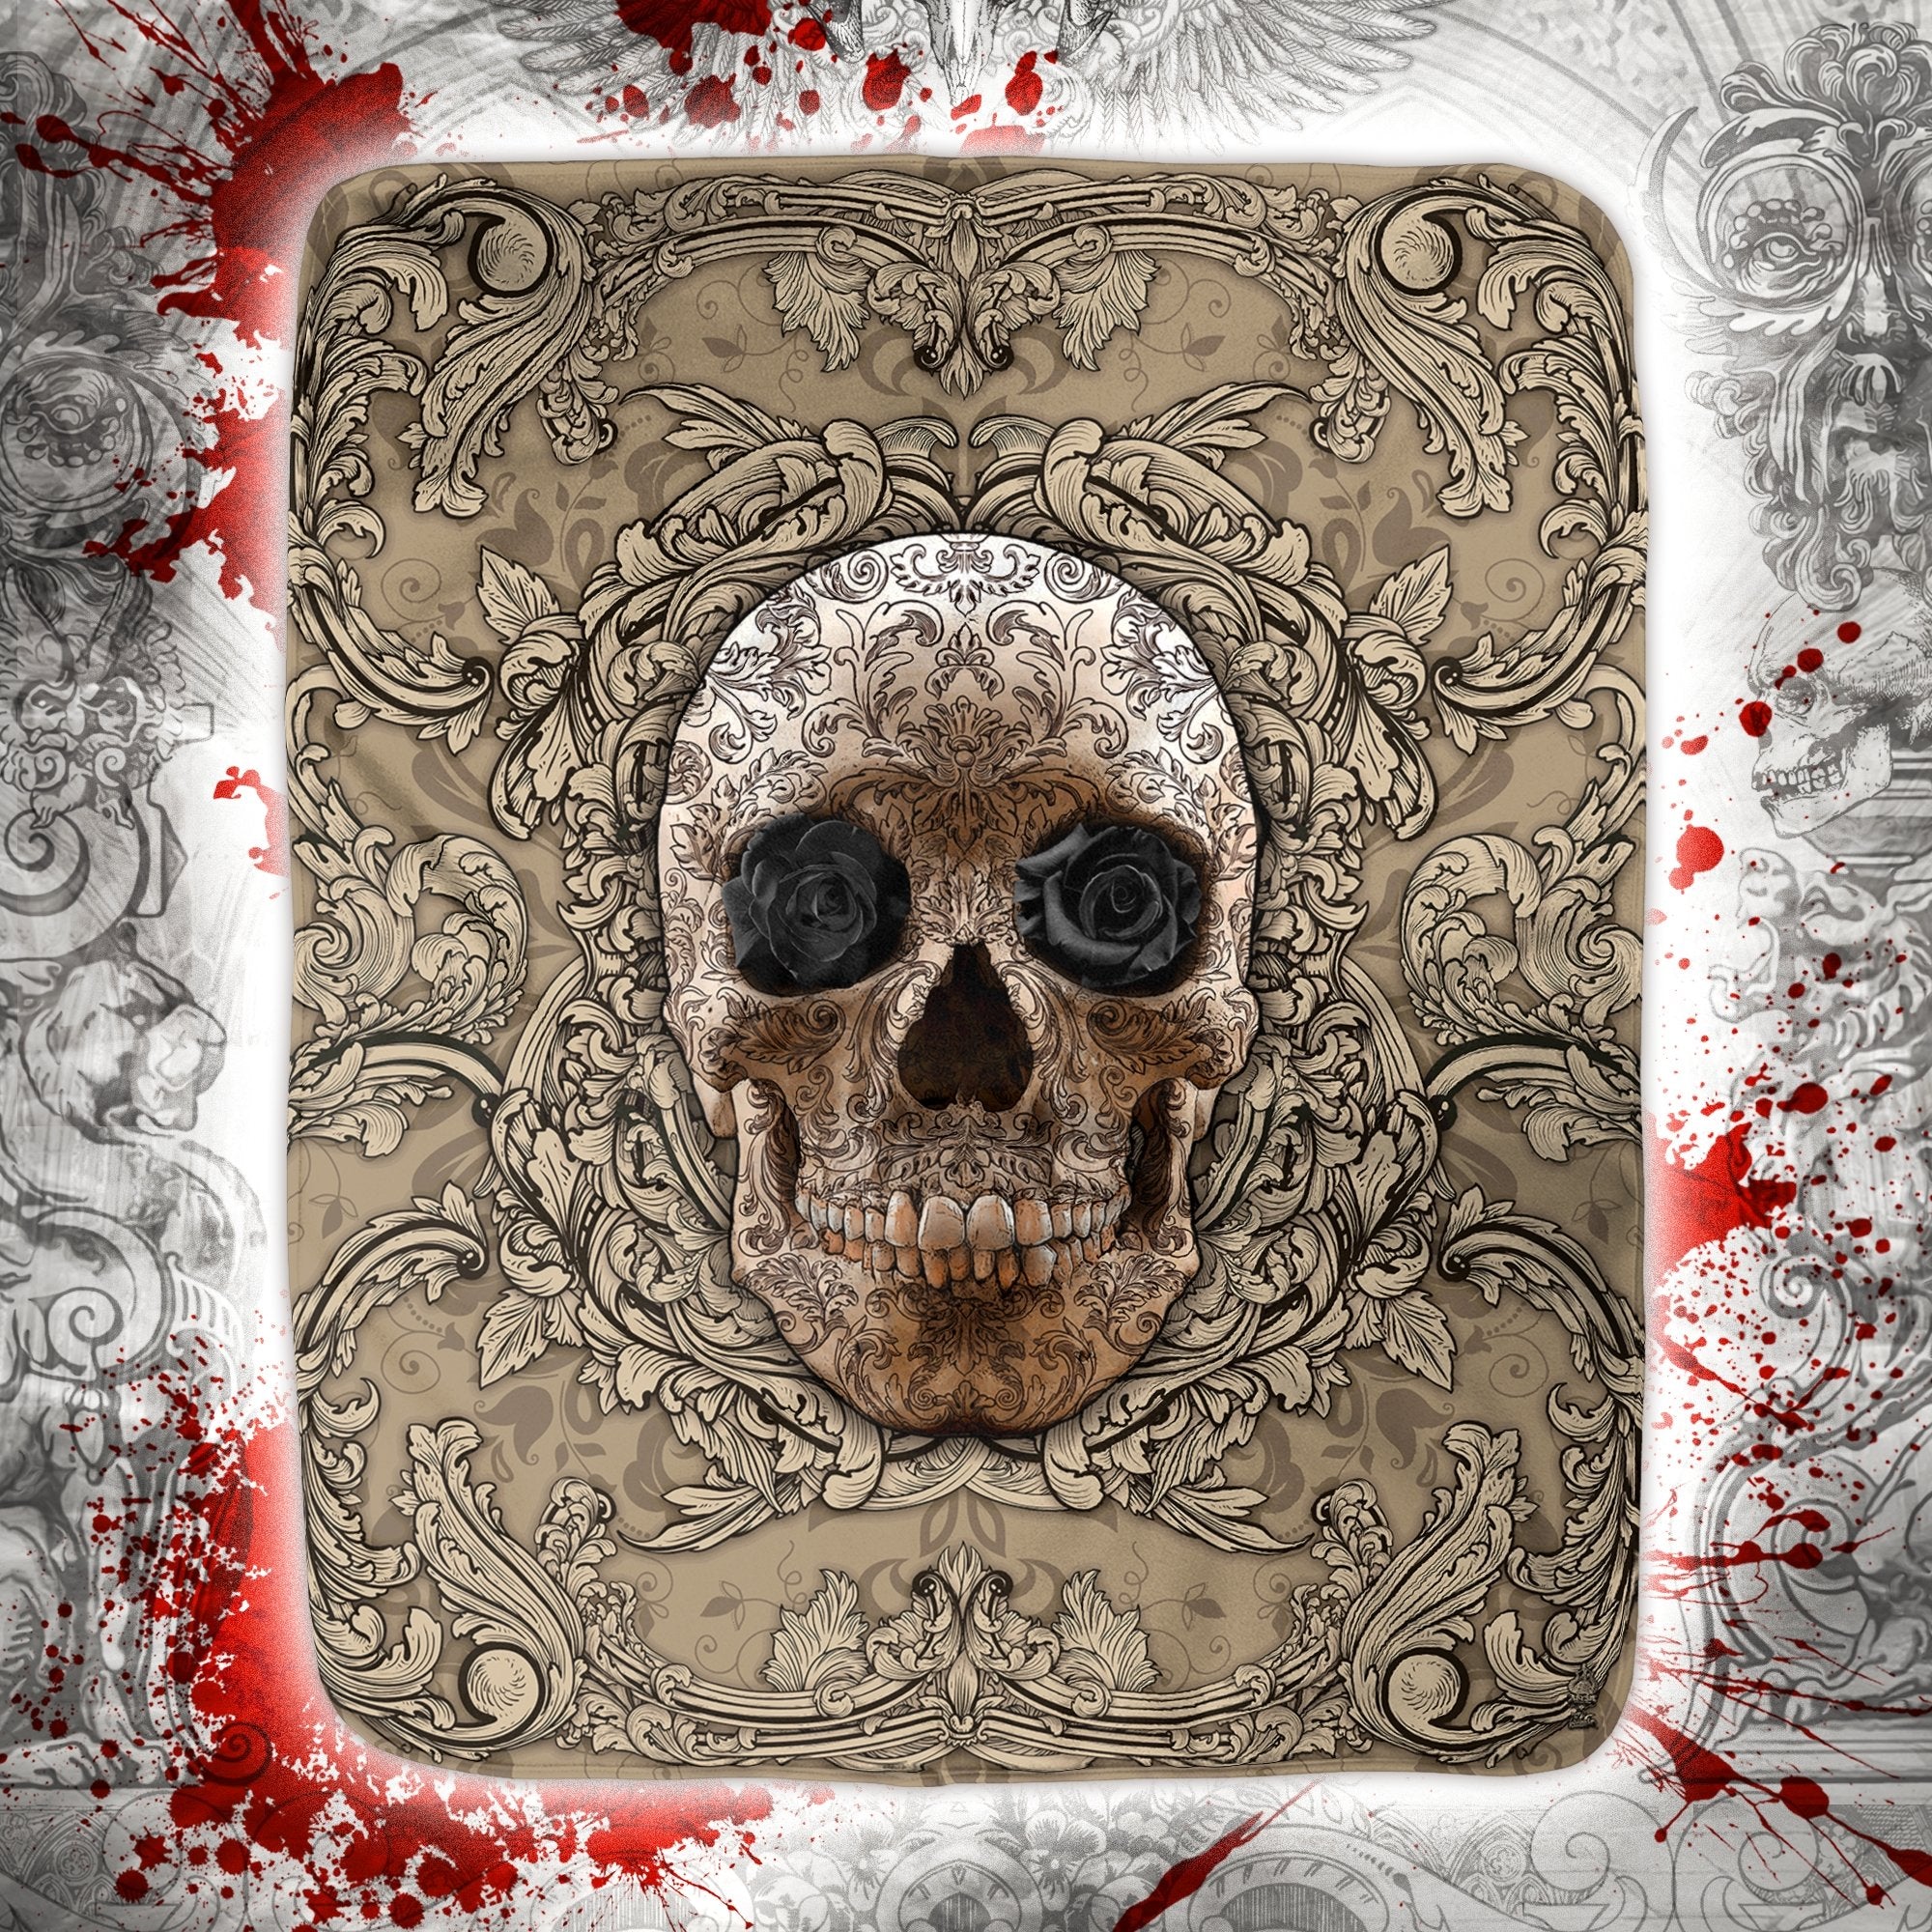 Skull Throw Fleece Blanket, Macabre Art, Alternative Home Decor, Eclectic and Funky Gift - Cream - Abysm Internal